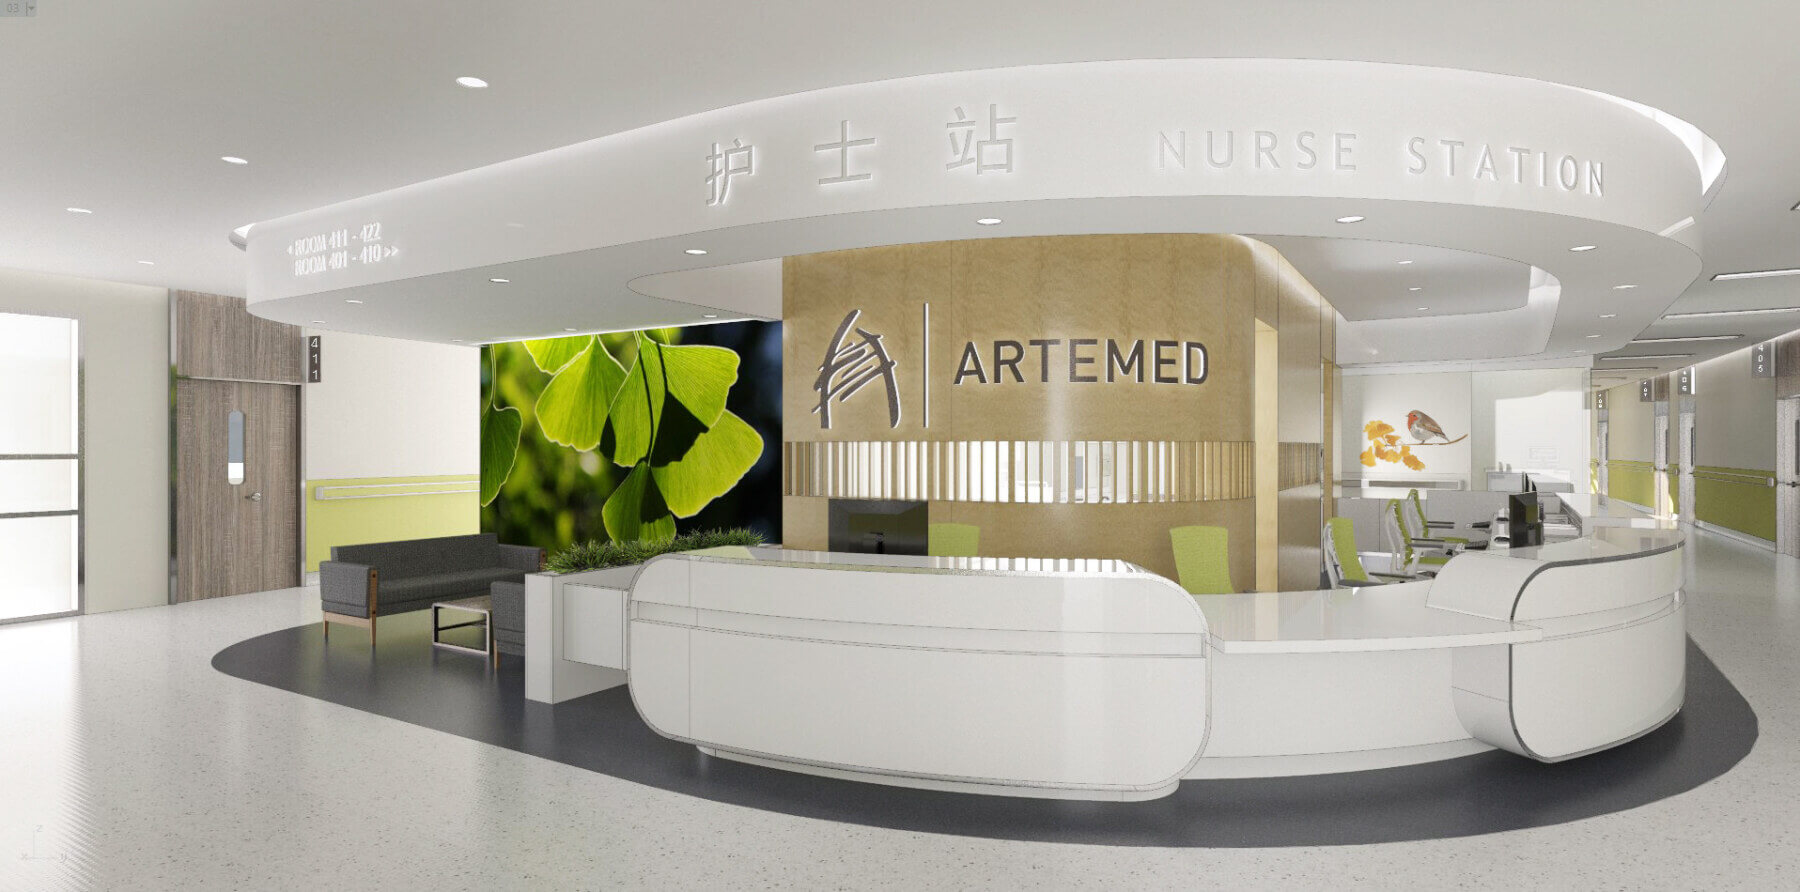 rendering of hospital nurse station